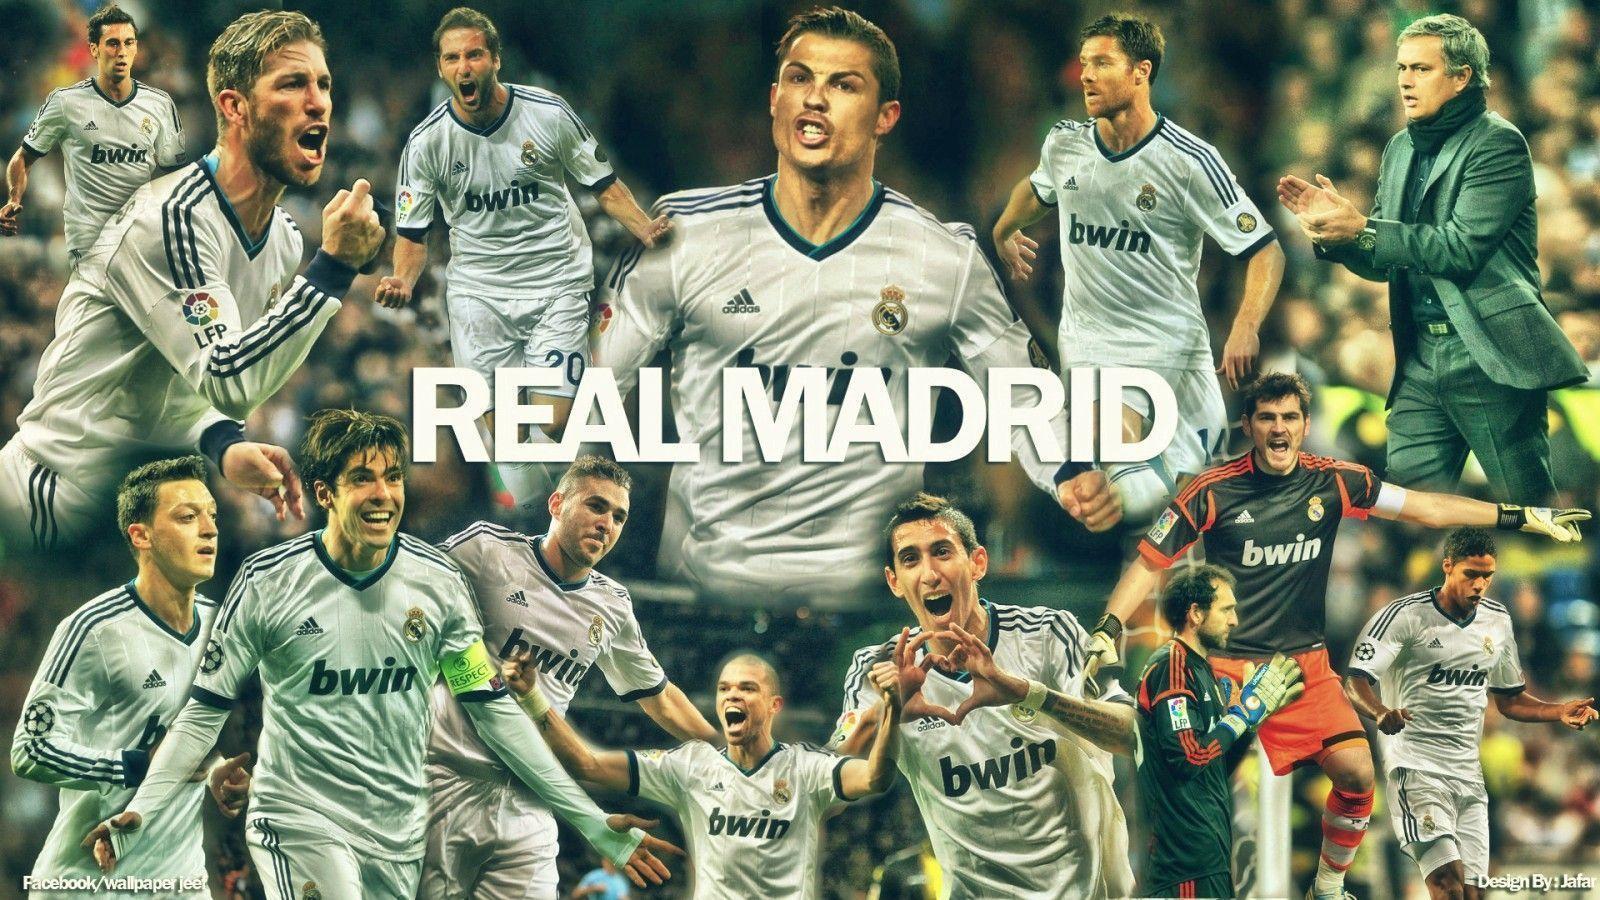 Real Madrid Wallpaper Full HD 2016 Wallpaper. Best